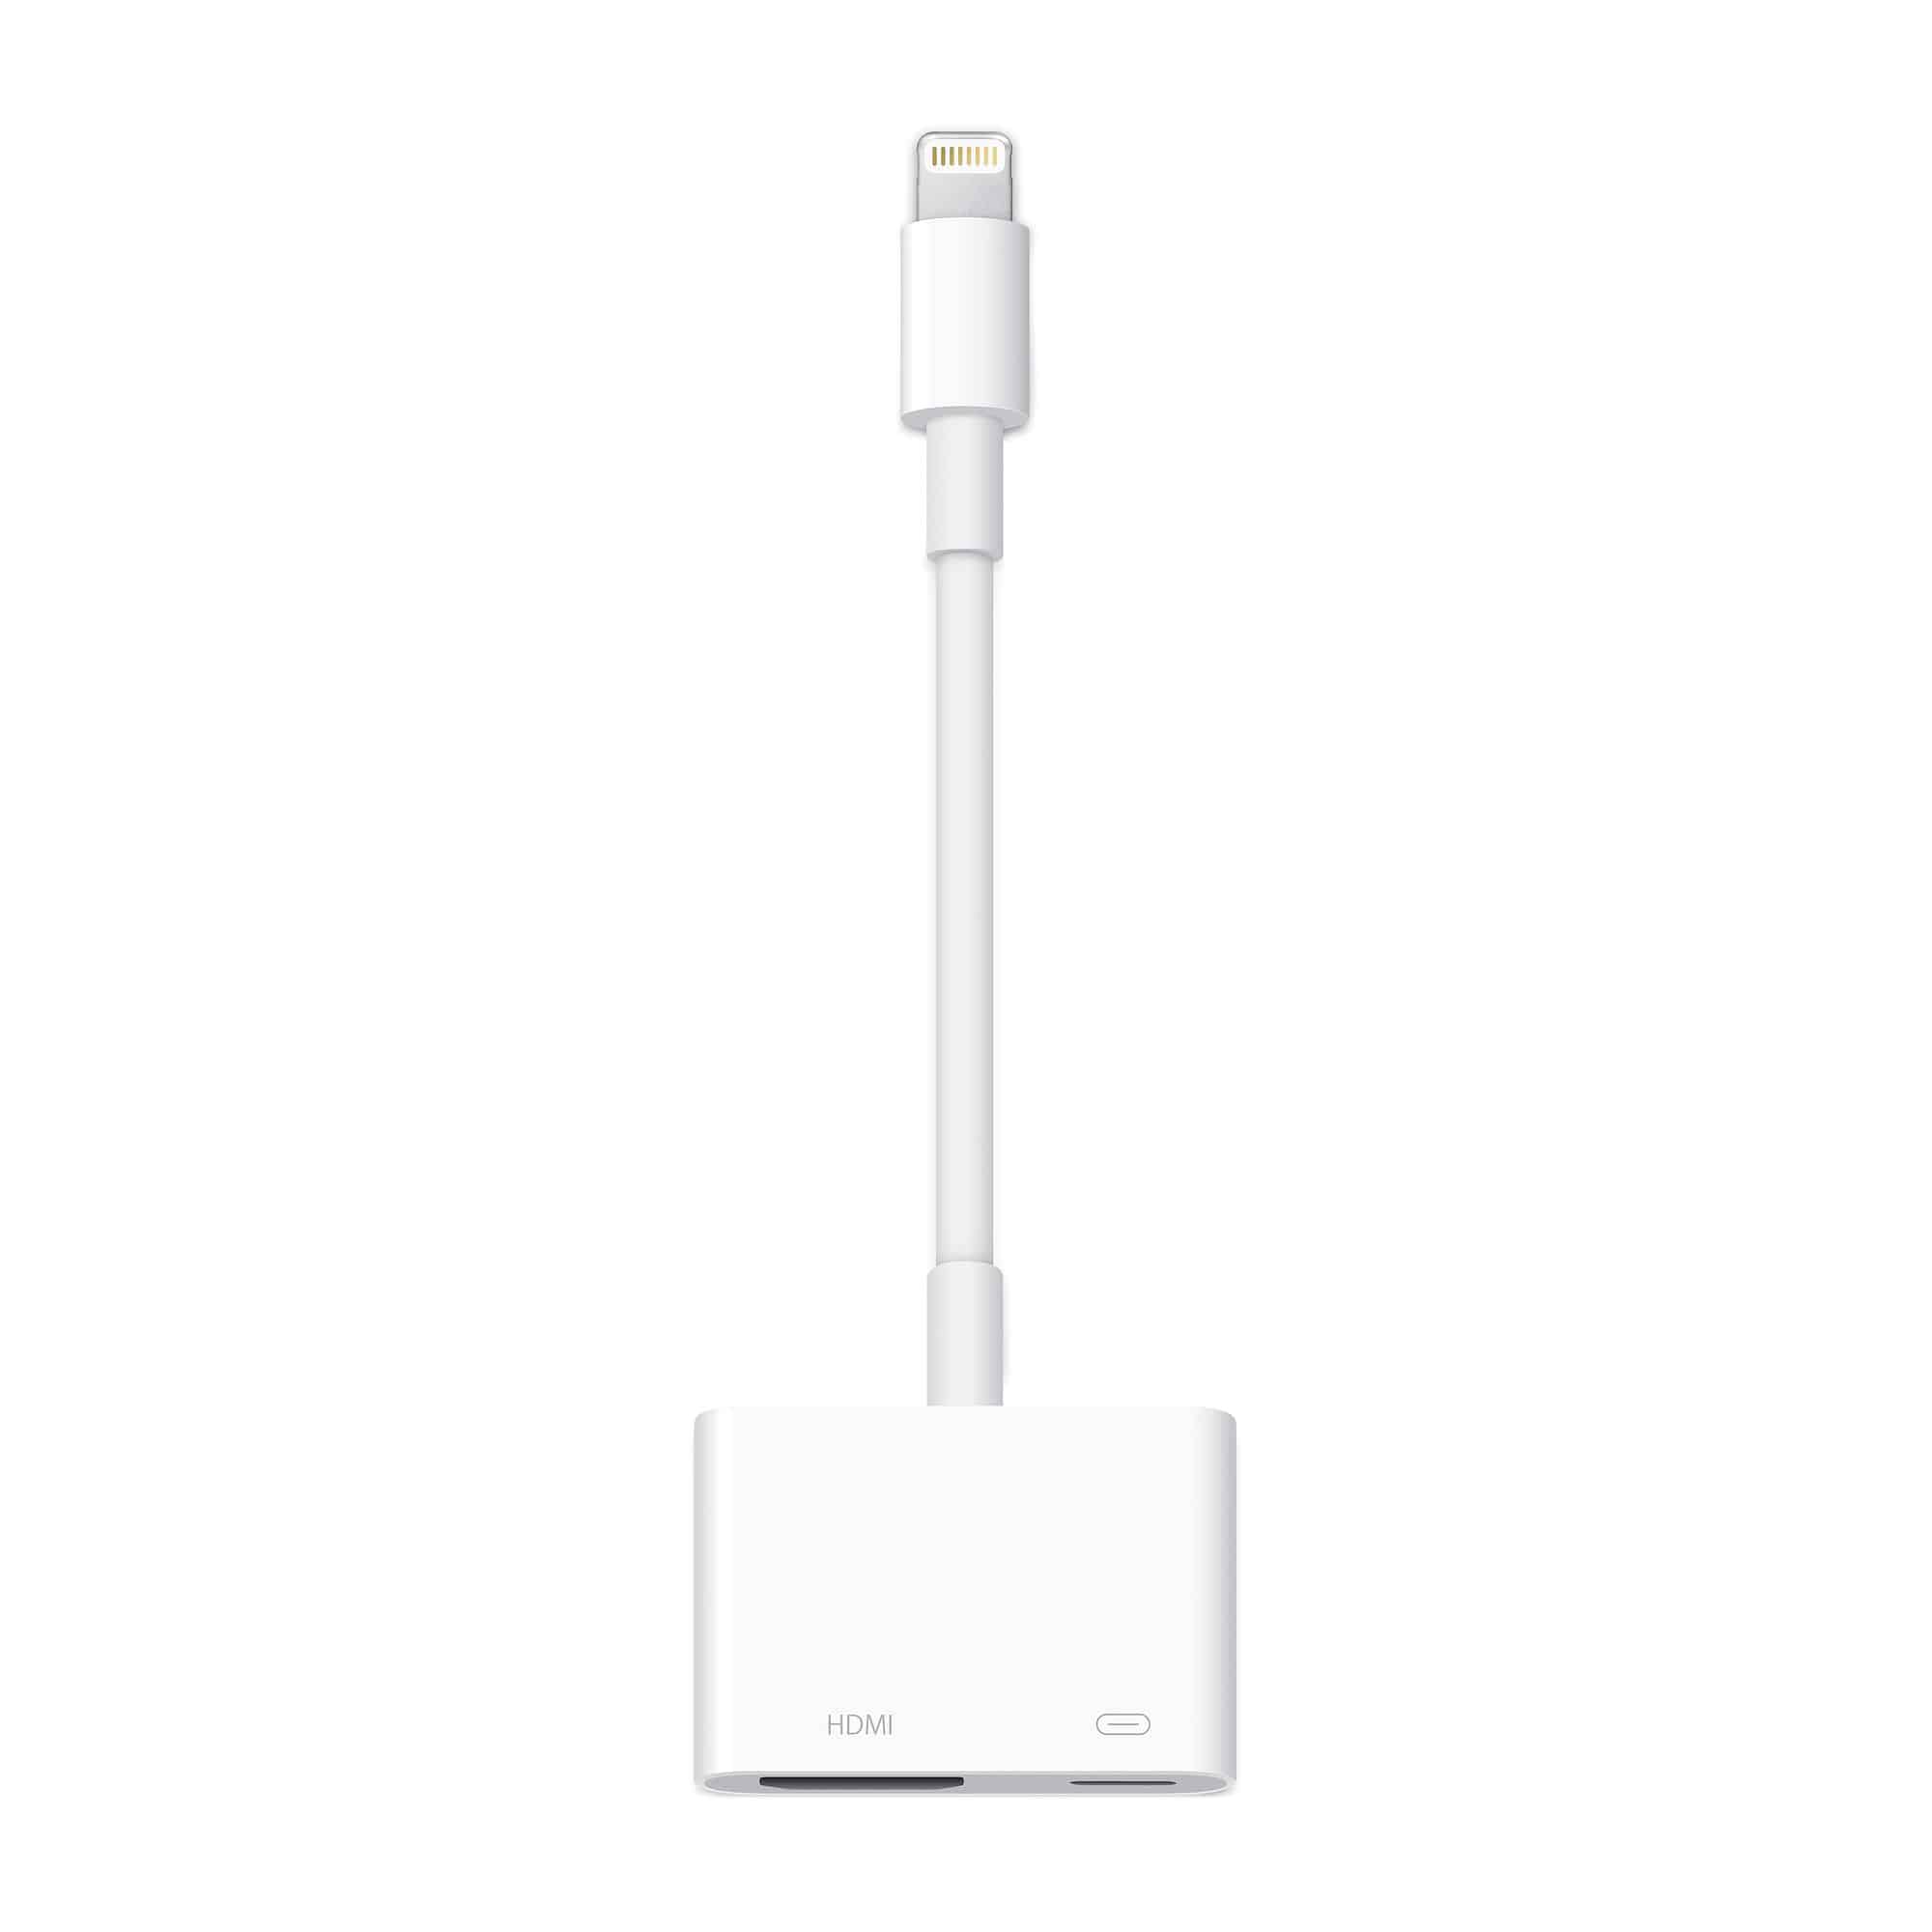 Featured image for “Apple Lightning - Digital AVアダプタMD826AM/A”